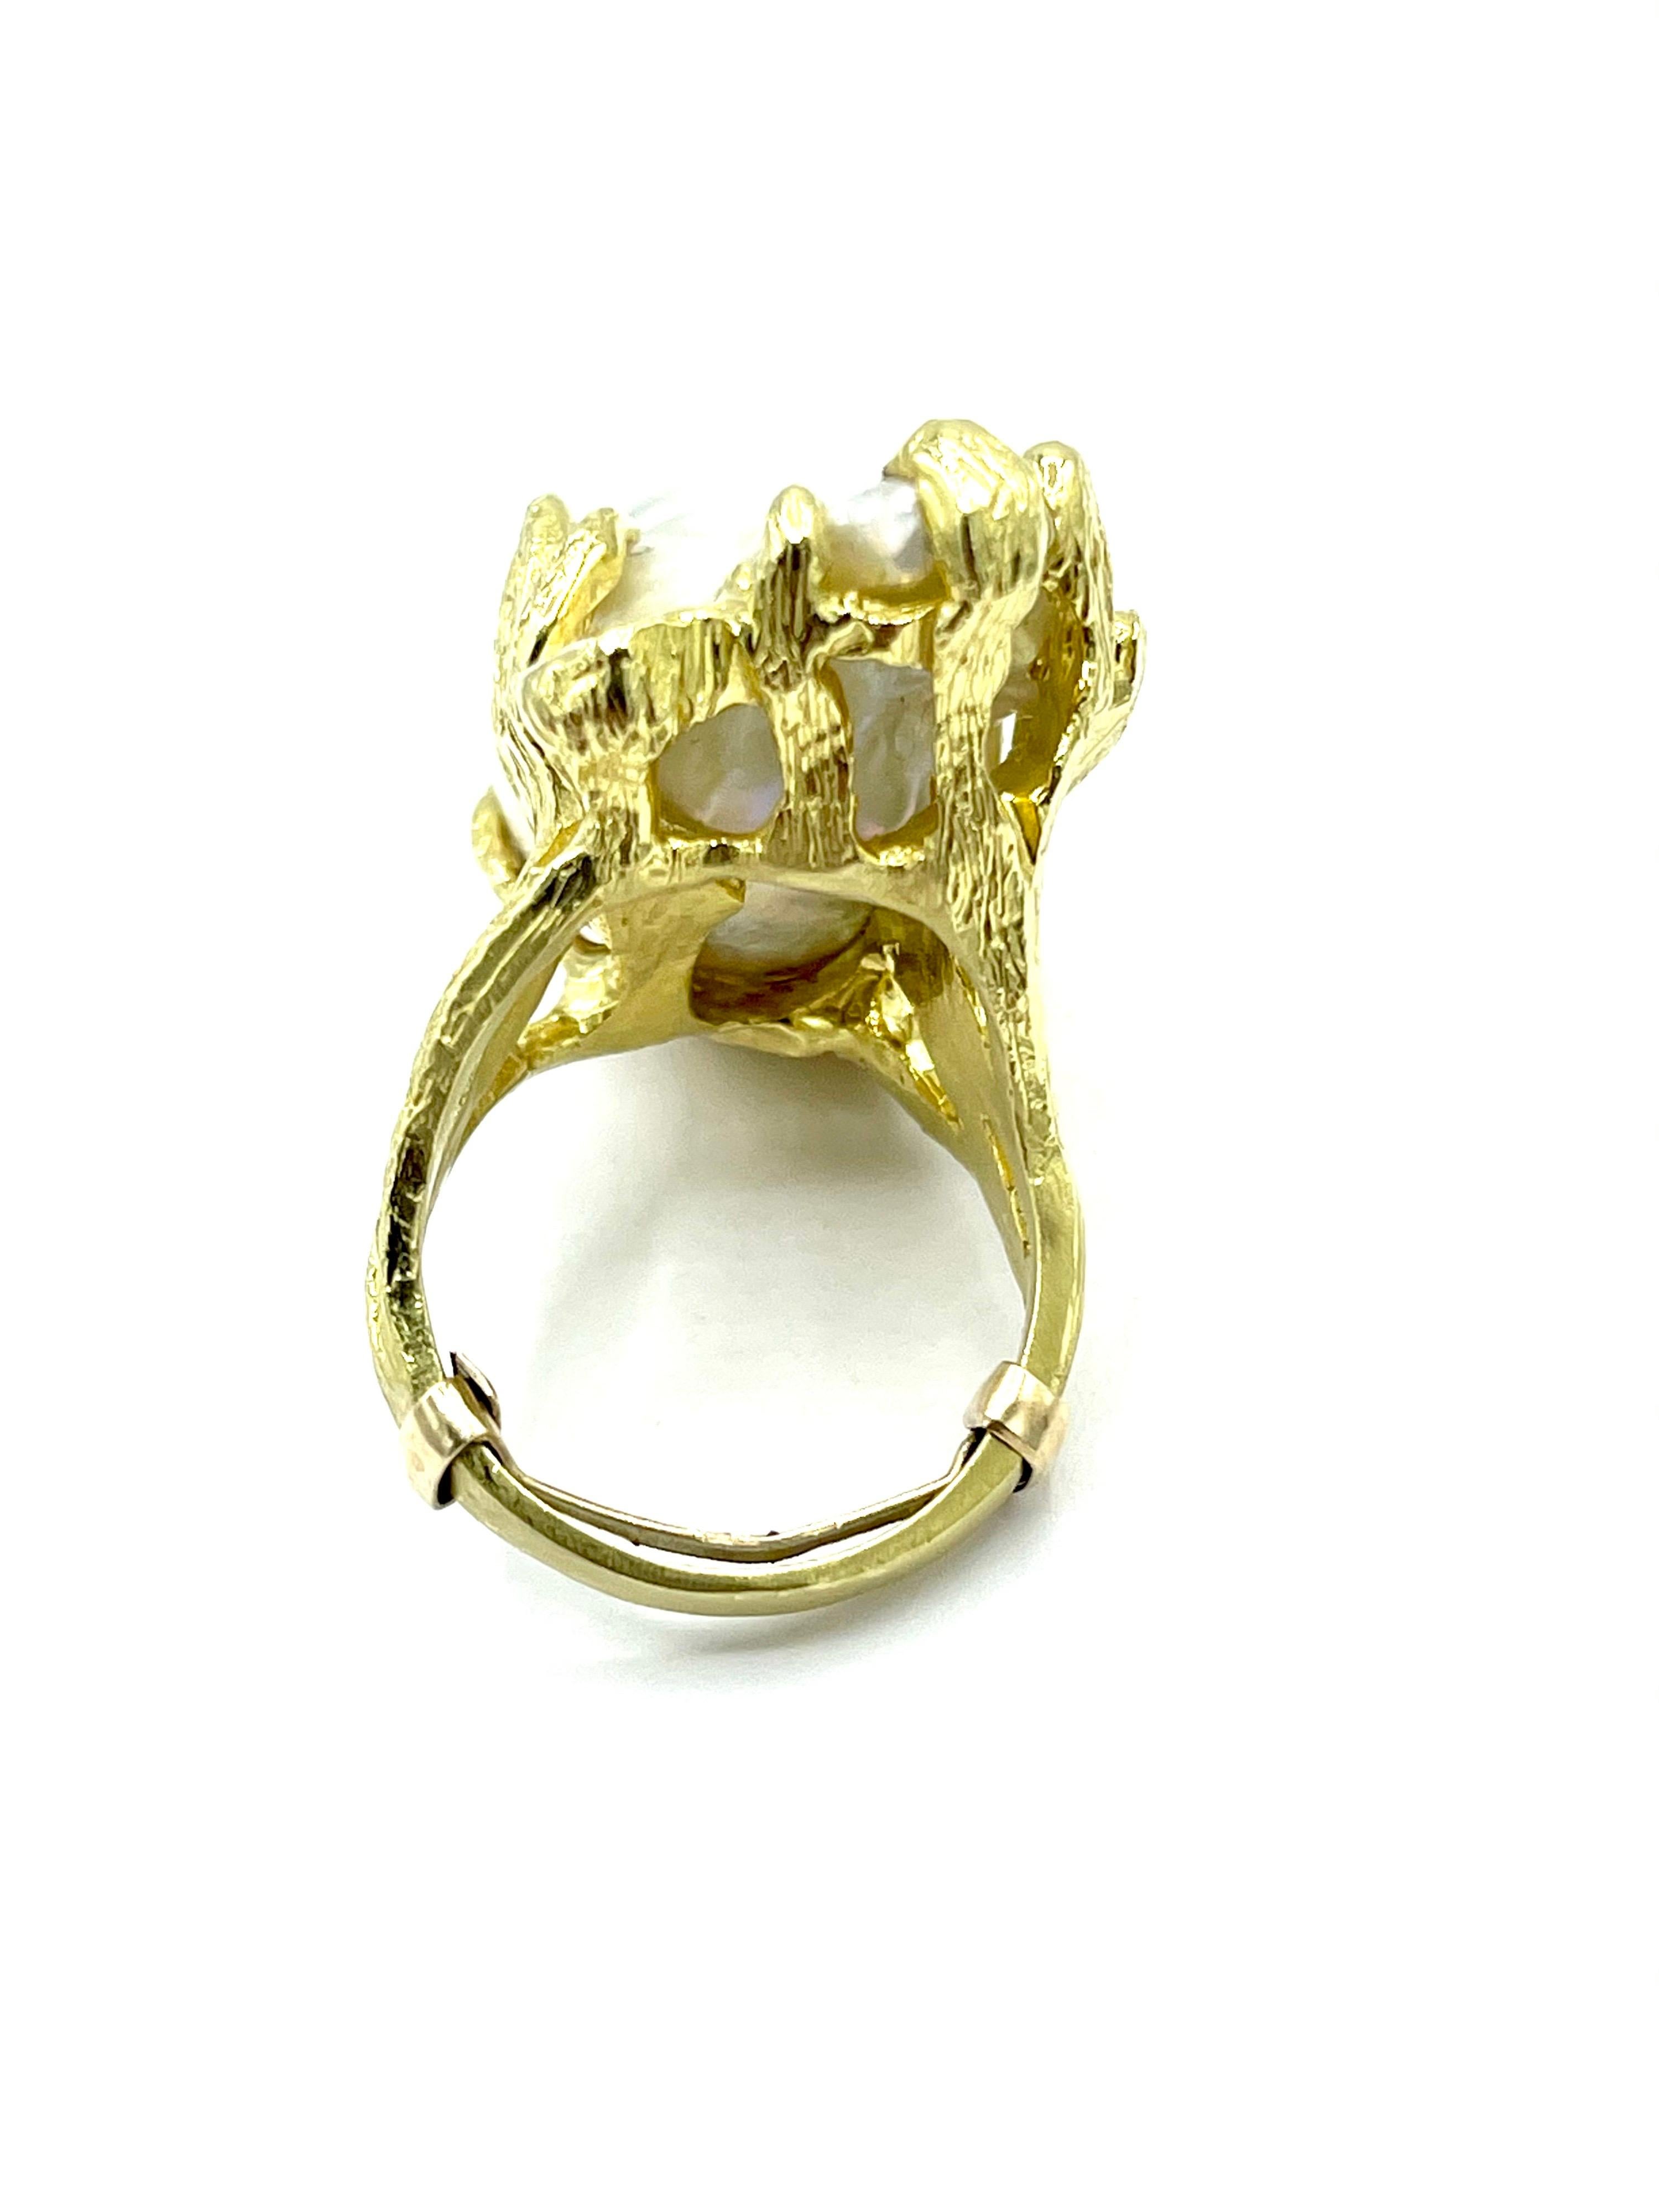 Mixed Cut Tanya Farah Baroque Pearl and 18 Karat Yellow Gold Fashion Ring For Sale